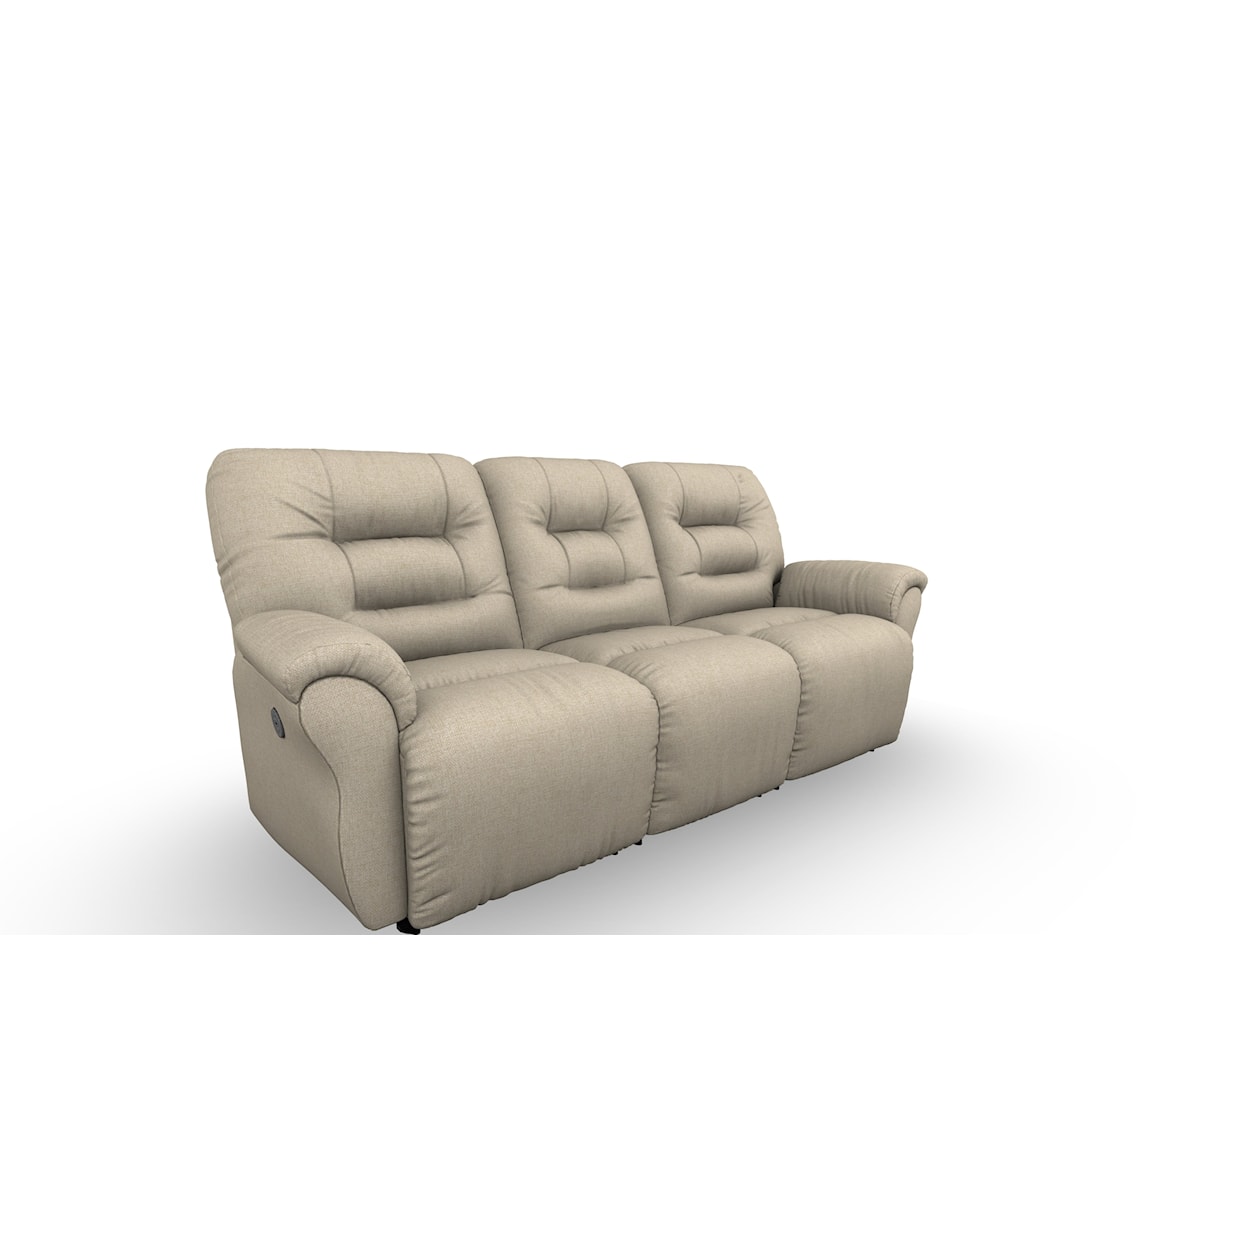 Bravo Furniture Unity Space Saver Reclining Sofa